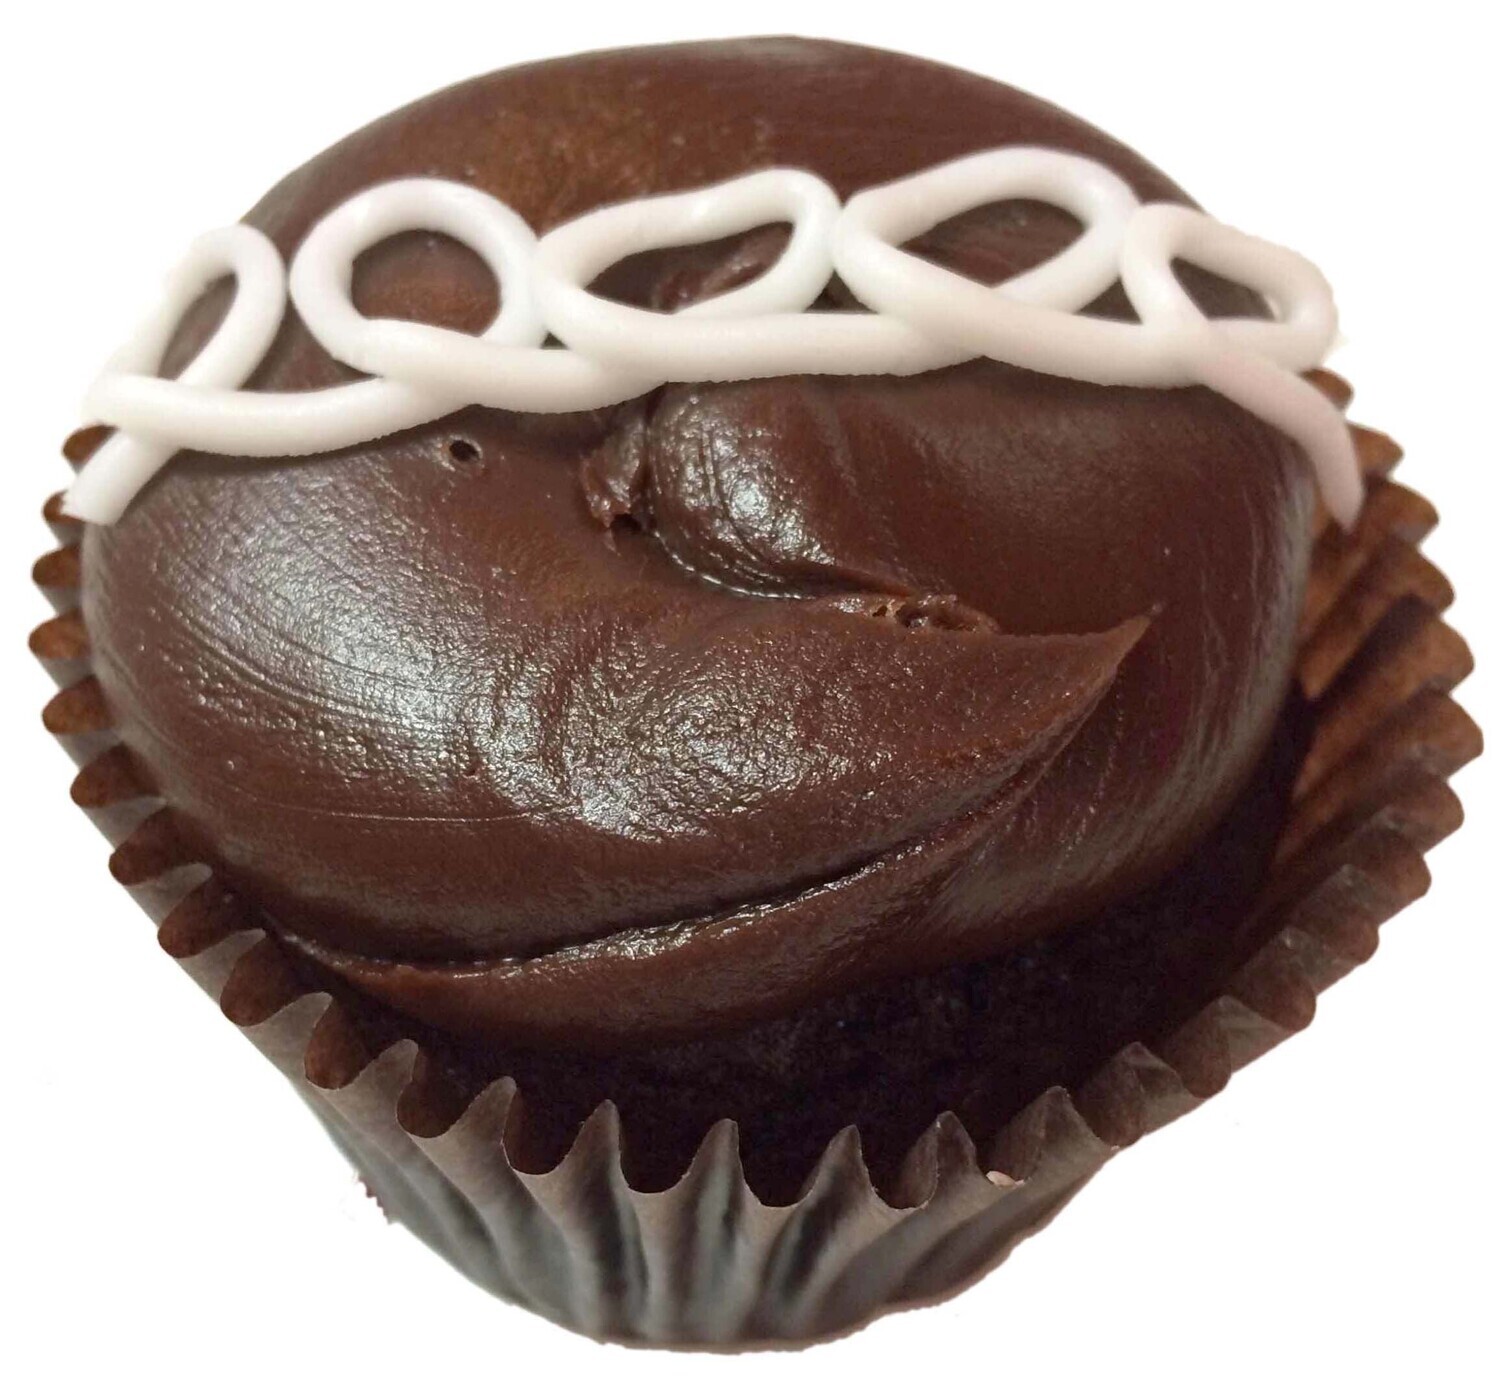 Chocolate Cream regular cupcake